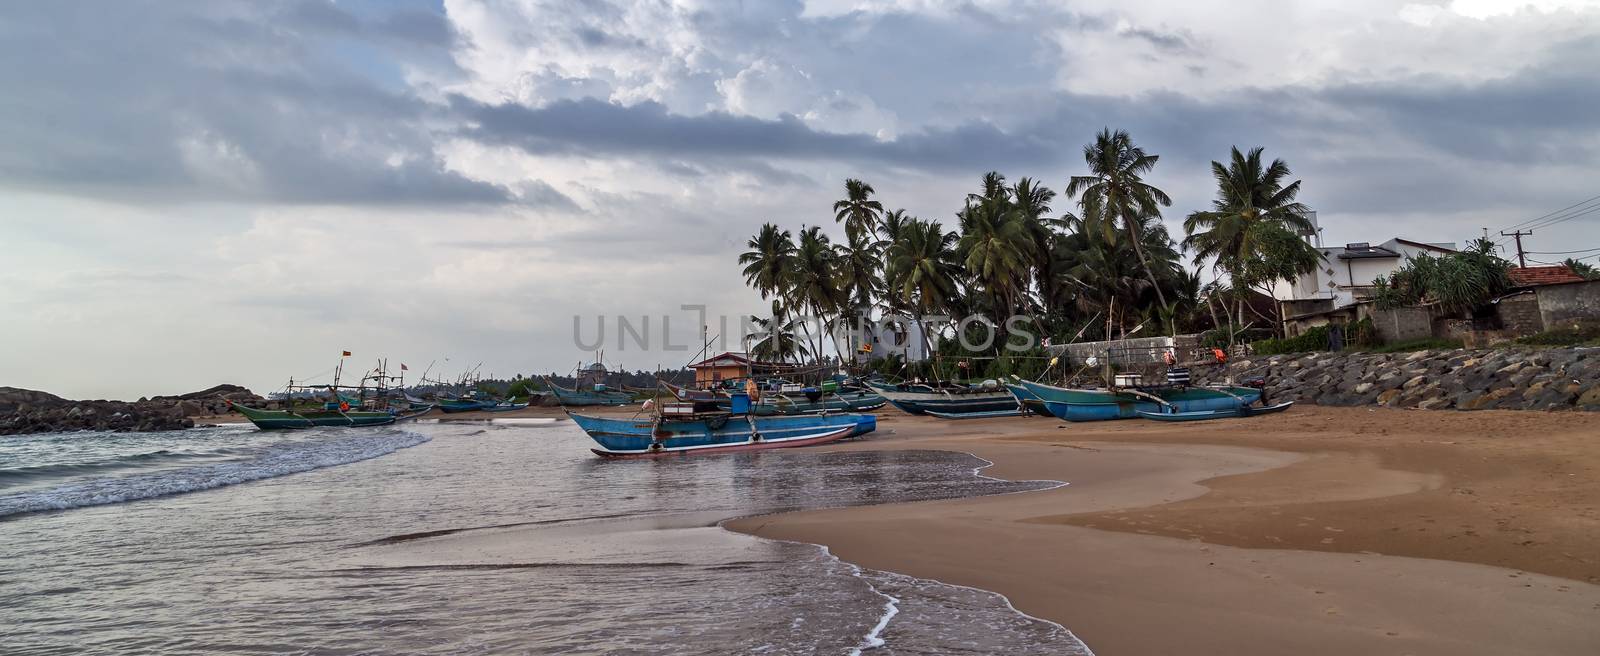 Sri Lankan traditional fishing catamarans, Colorful fishing boats on a long sandy beach on the ocean coast of Sri Lanka. Popular landmark fishing